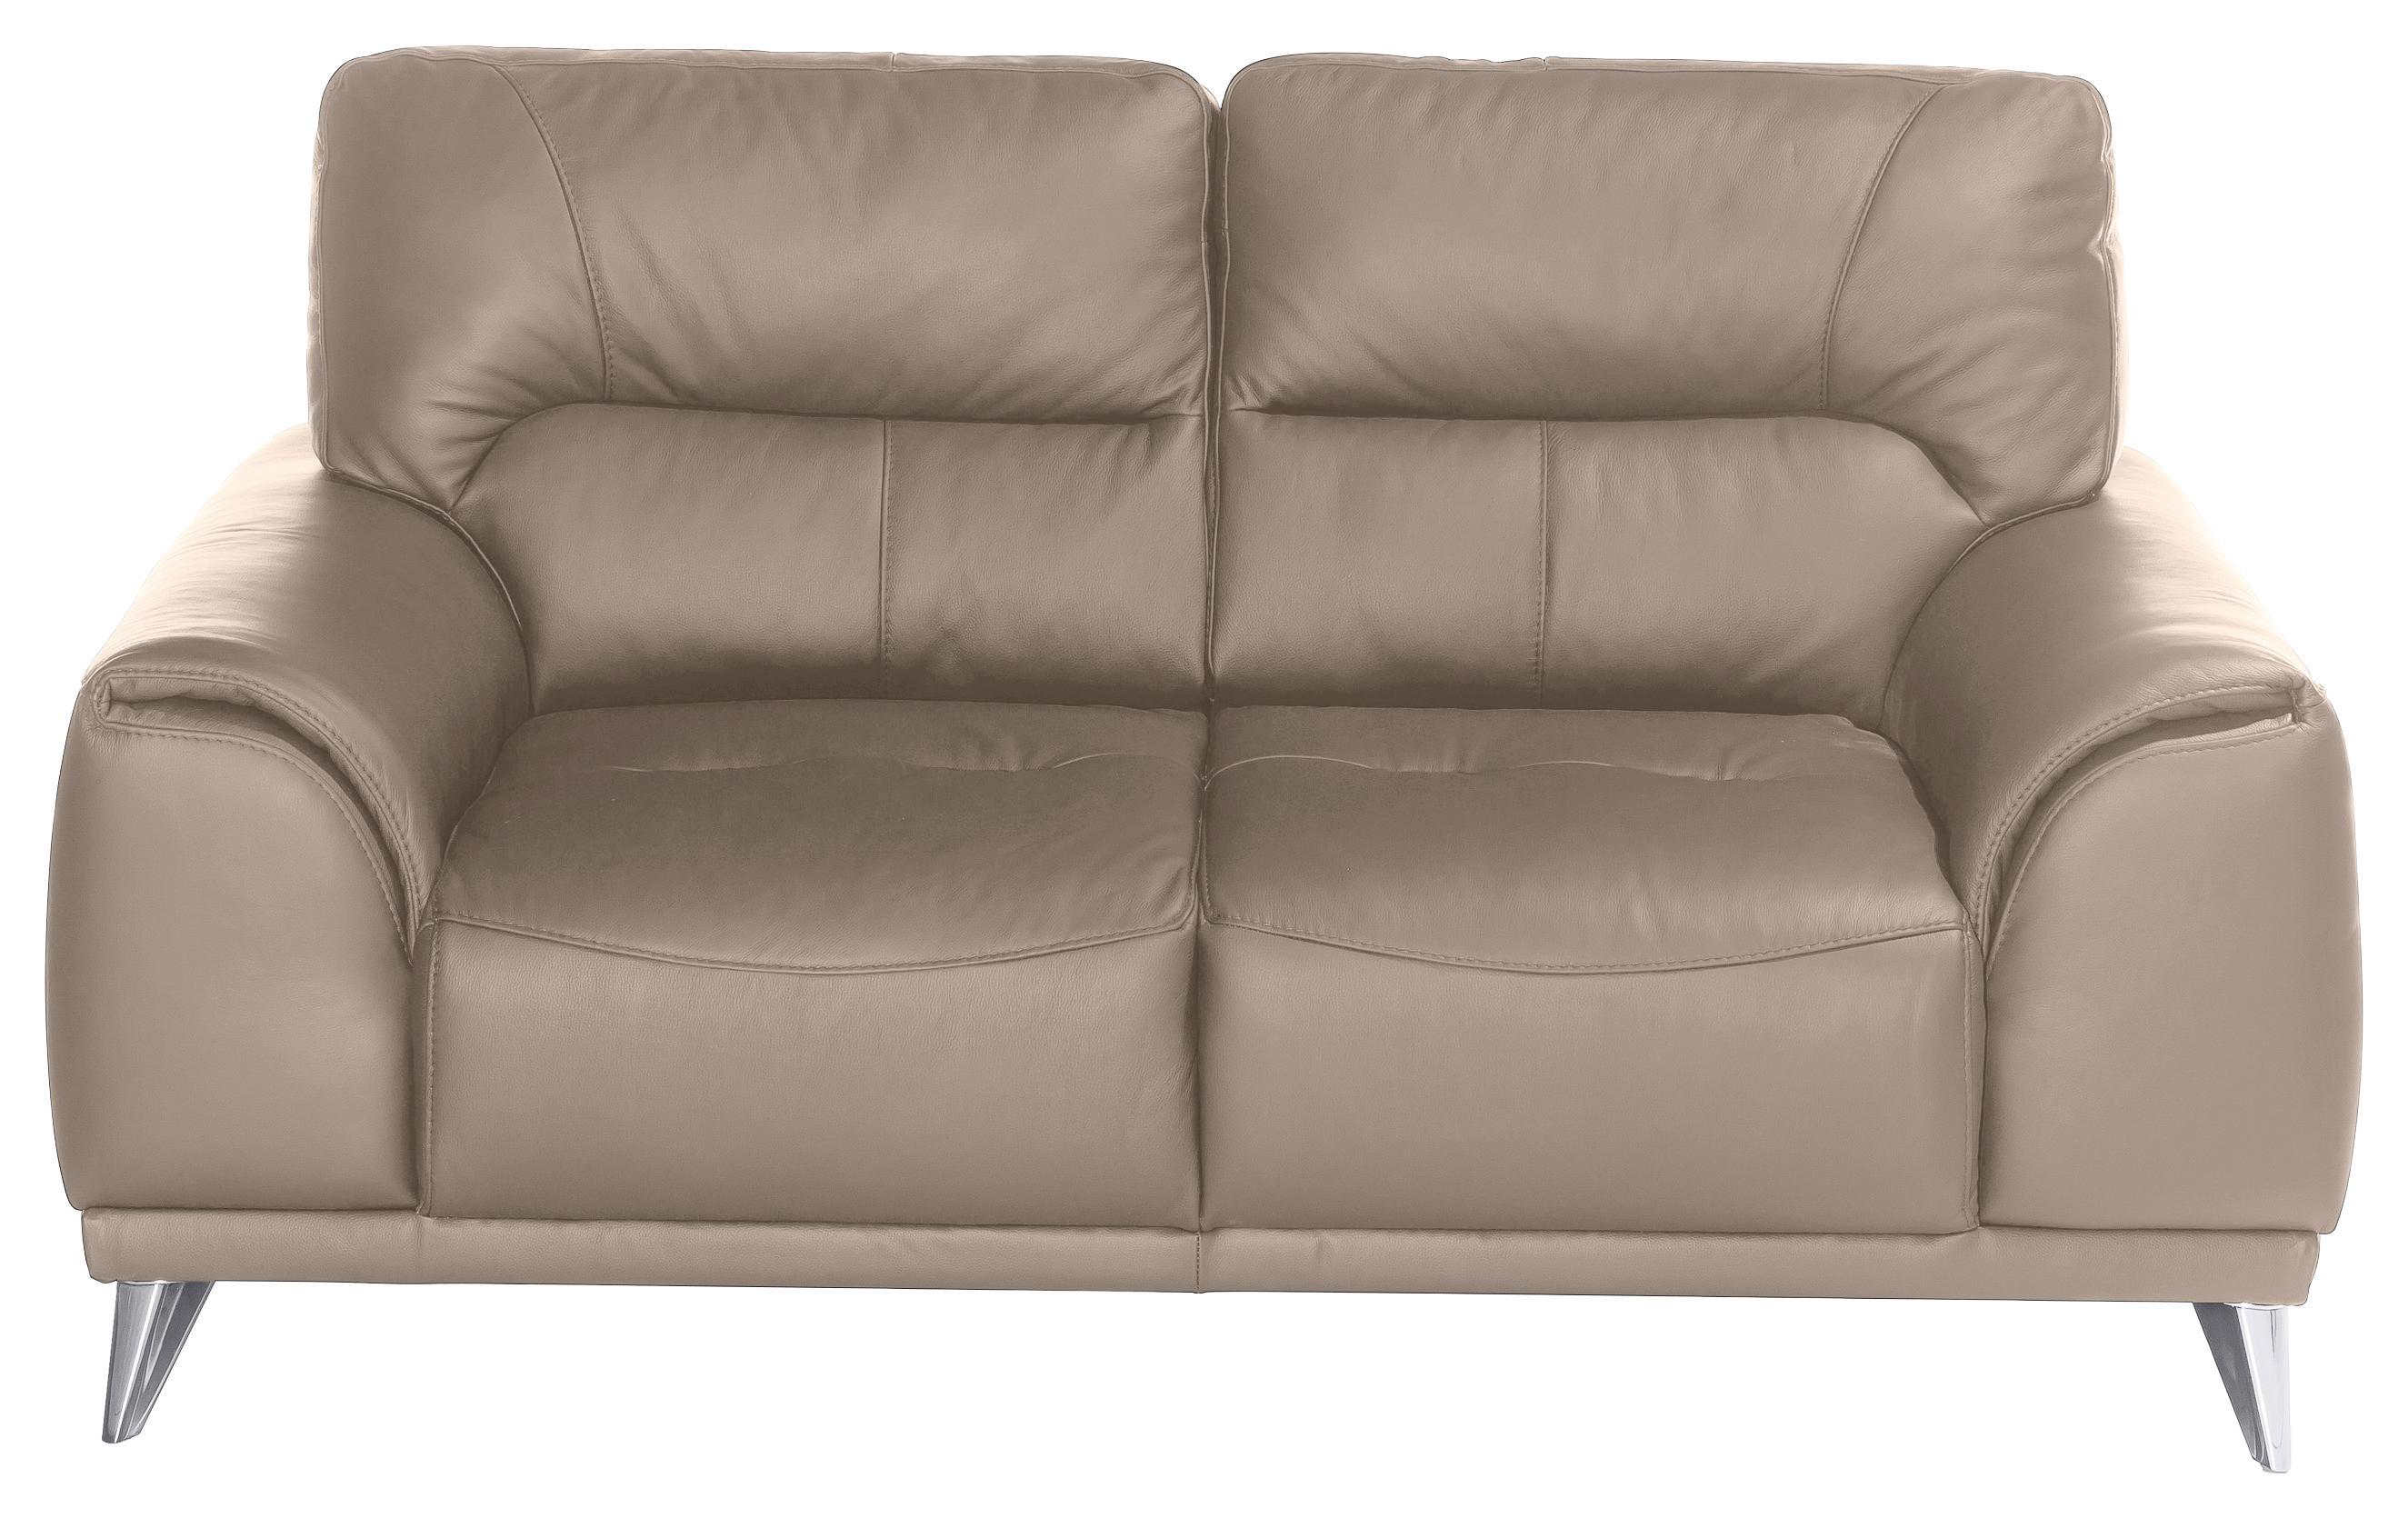 Zweisitzer-Sofa "Frisco" , sandfarben - Sandfarben/Chromfarben, MODERN, Textil/Metall (166/92/96cm) - MID.YOU